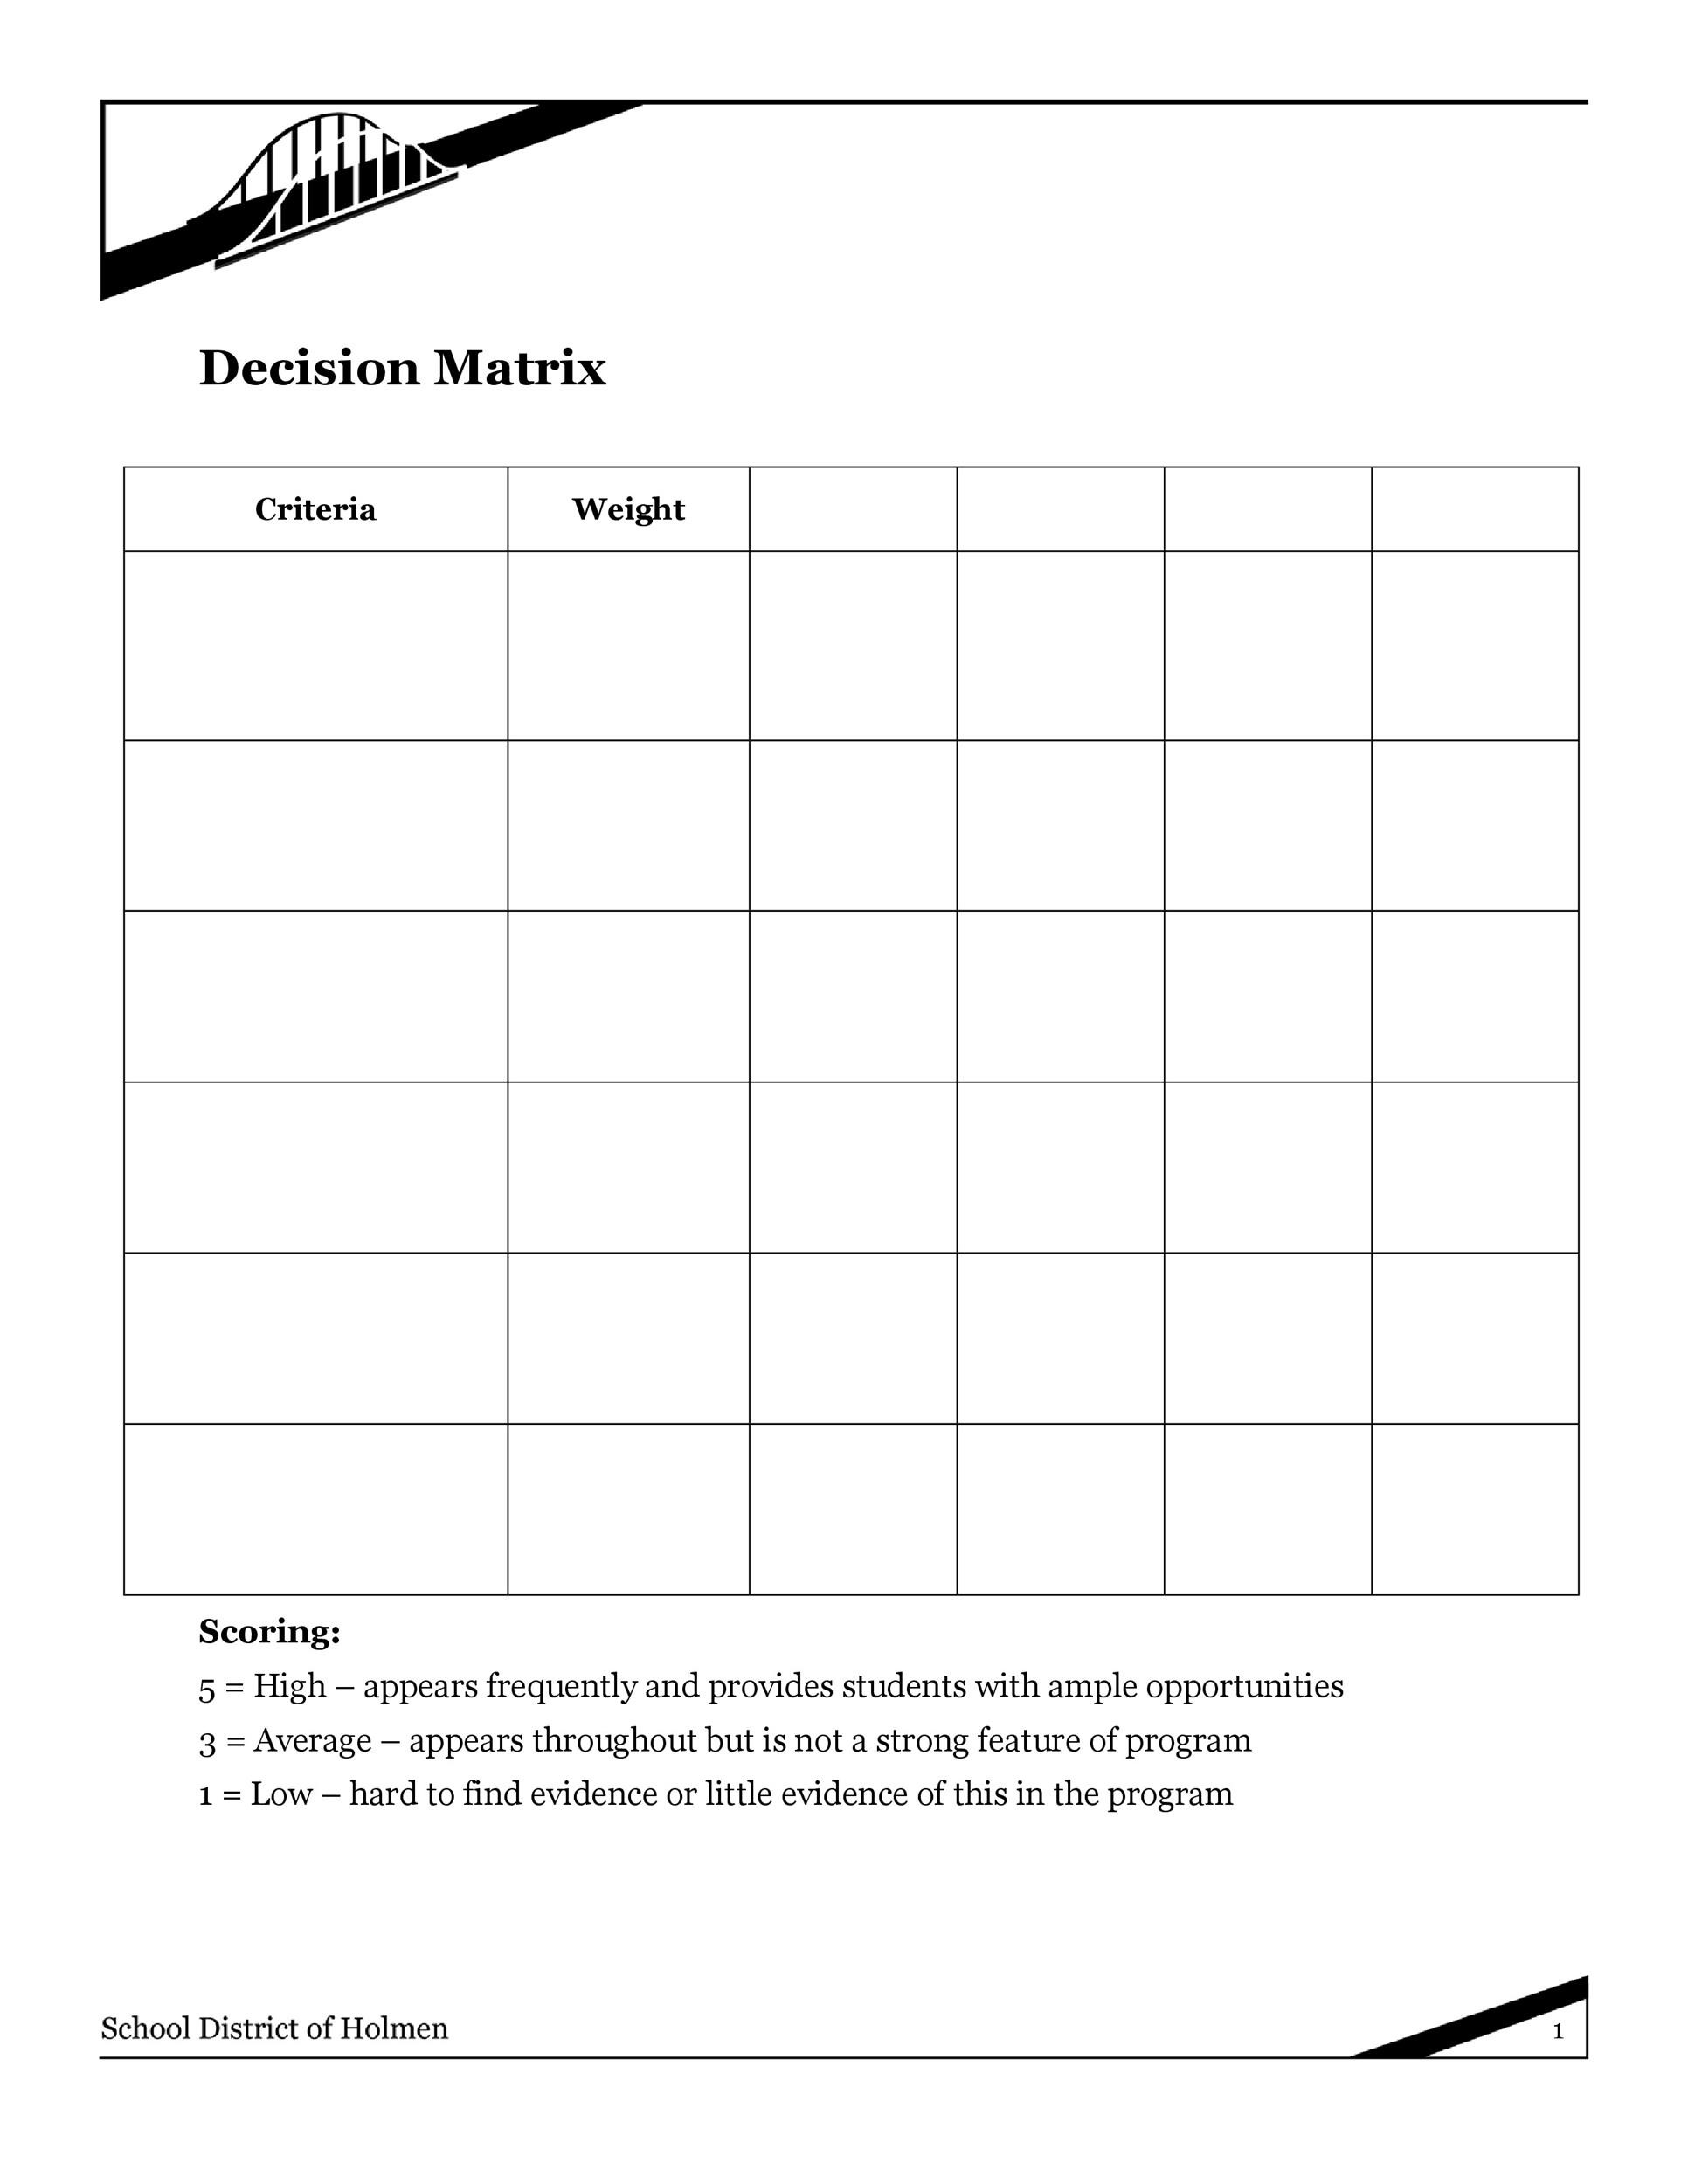 Free decision matrix template 09